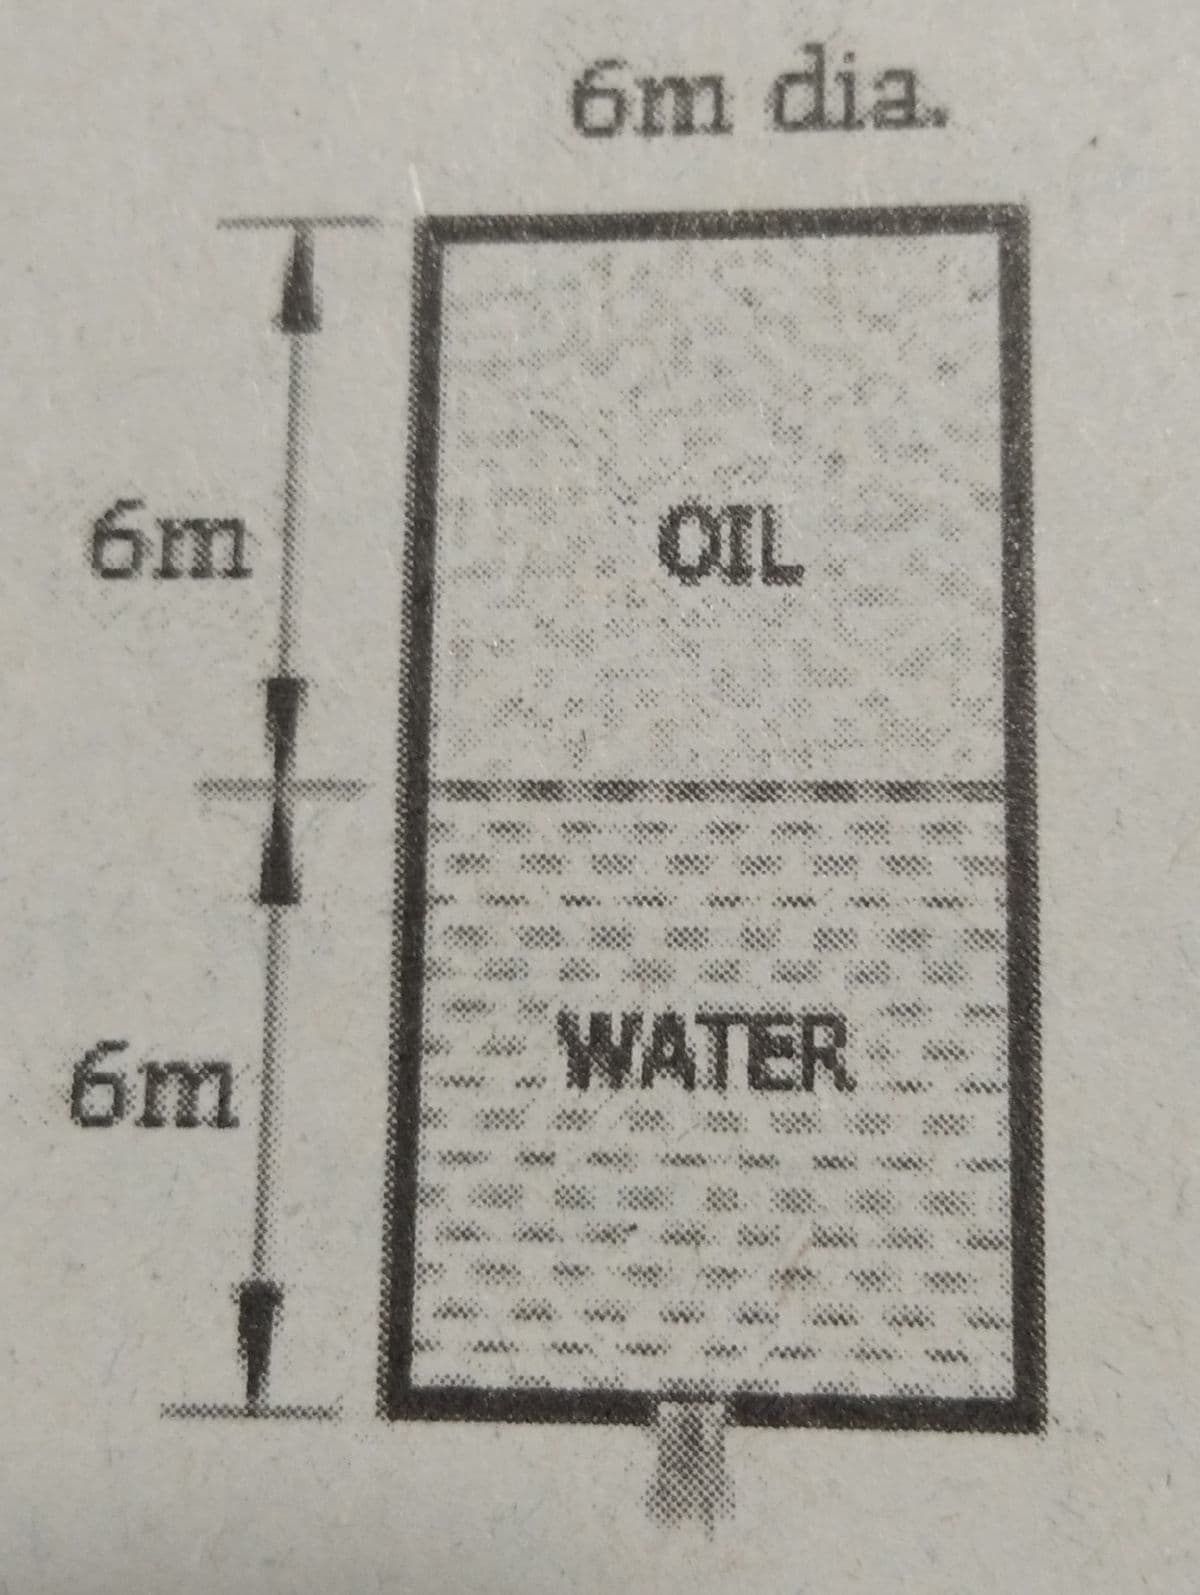 6m dia.
6m
OIL
6m
WATER
